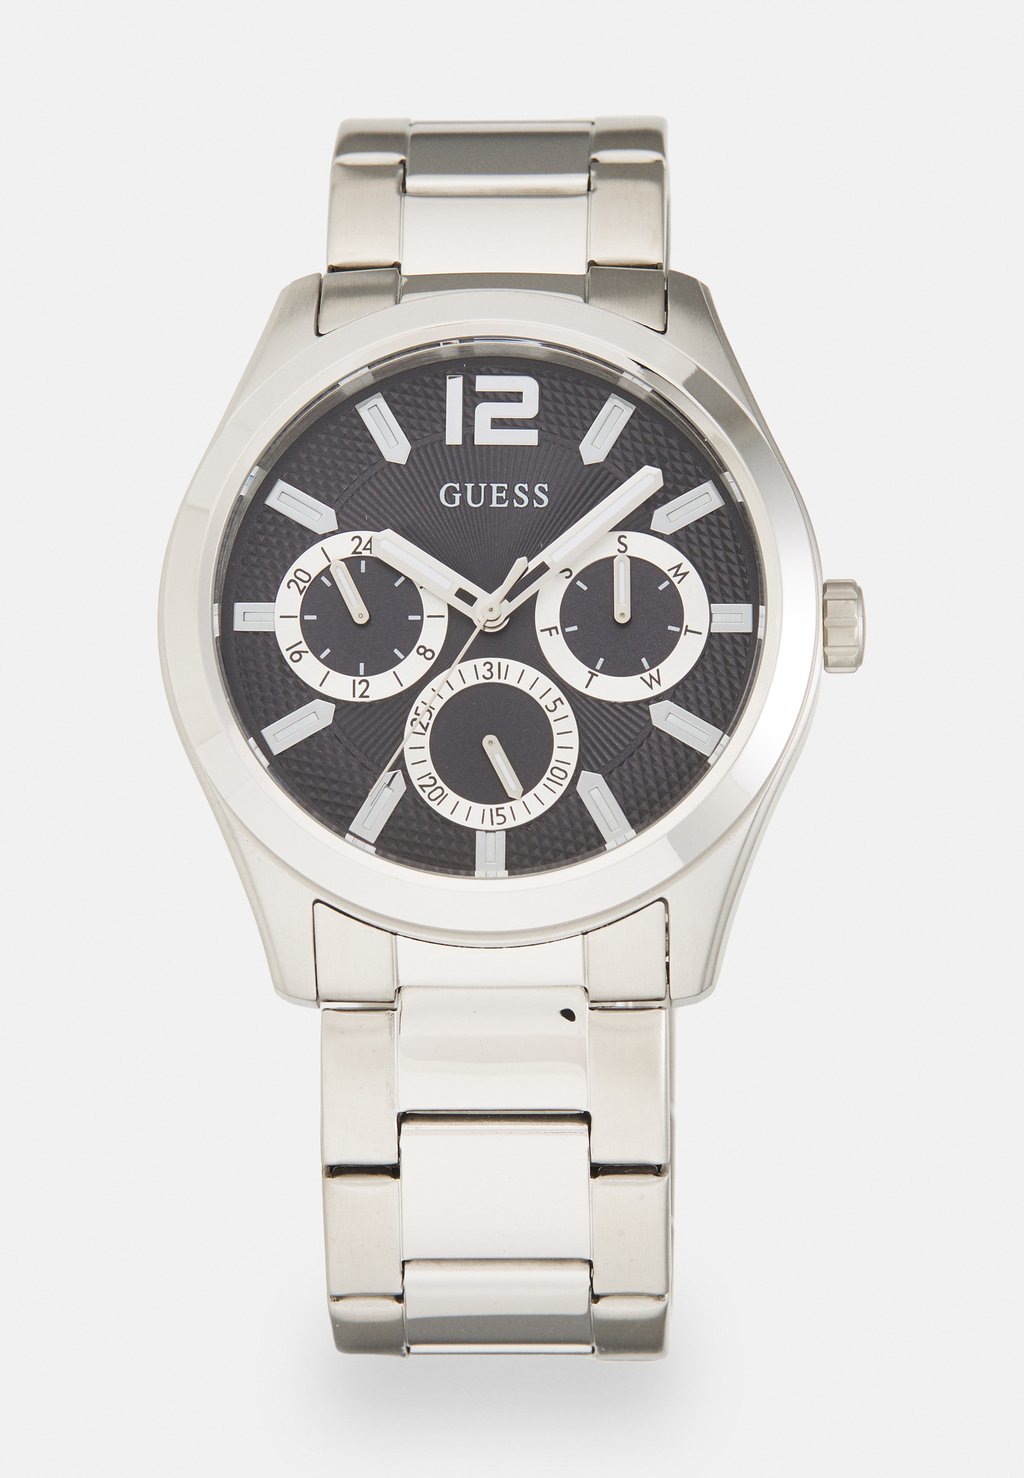 Часы ZEN Guess, цвет silver-coloured часы prodigy exclusive guess цвет silver coloured black